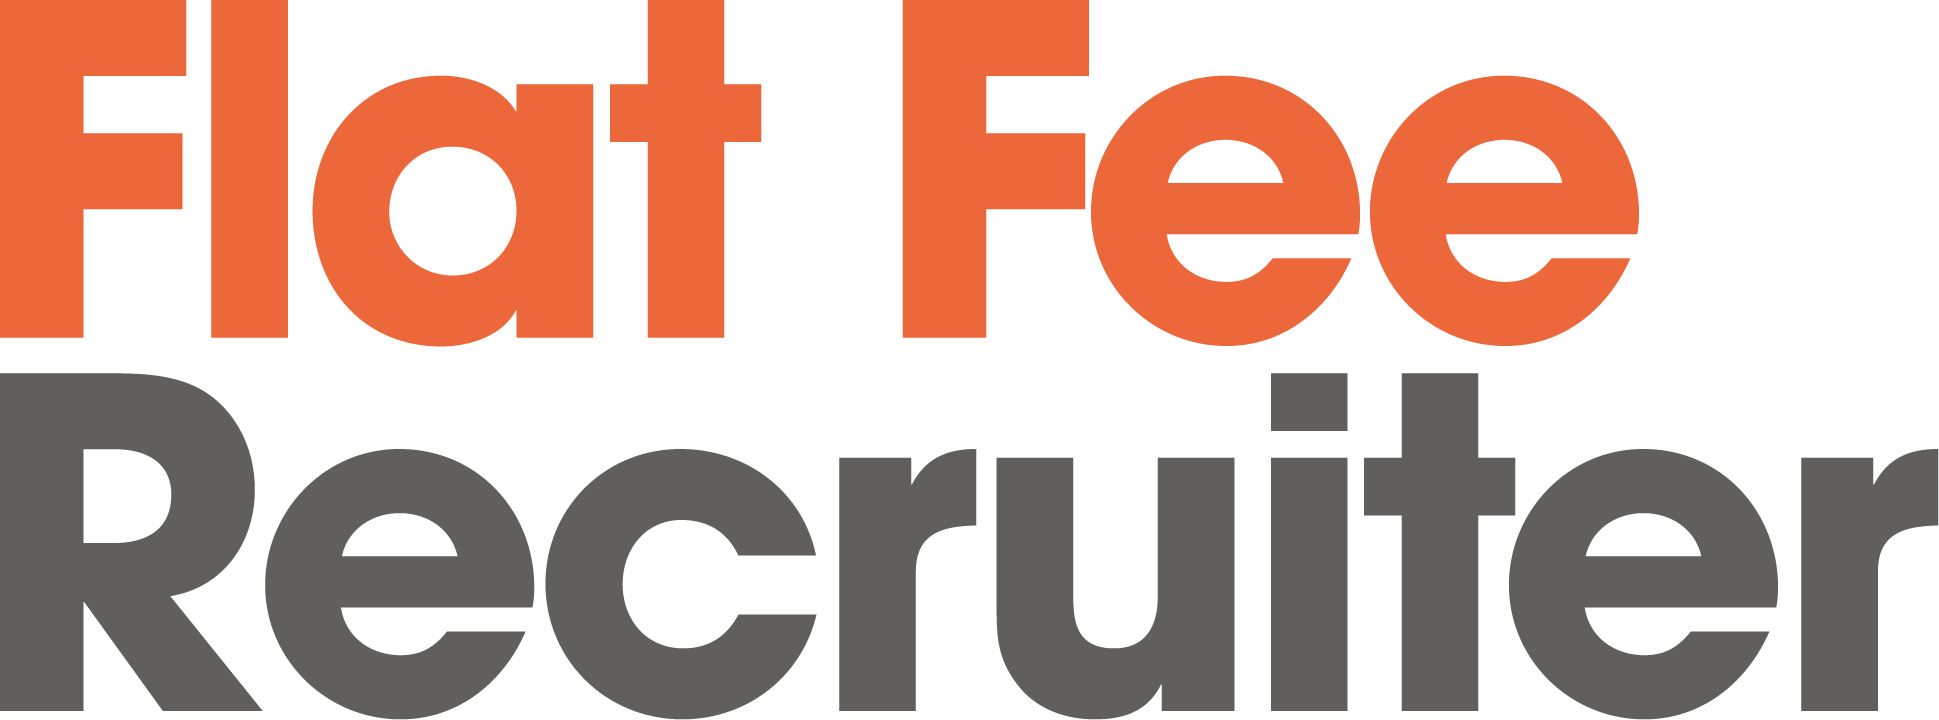 Flat Fee Recruiter Logo